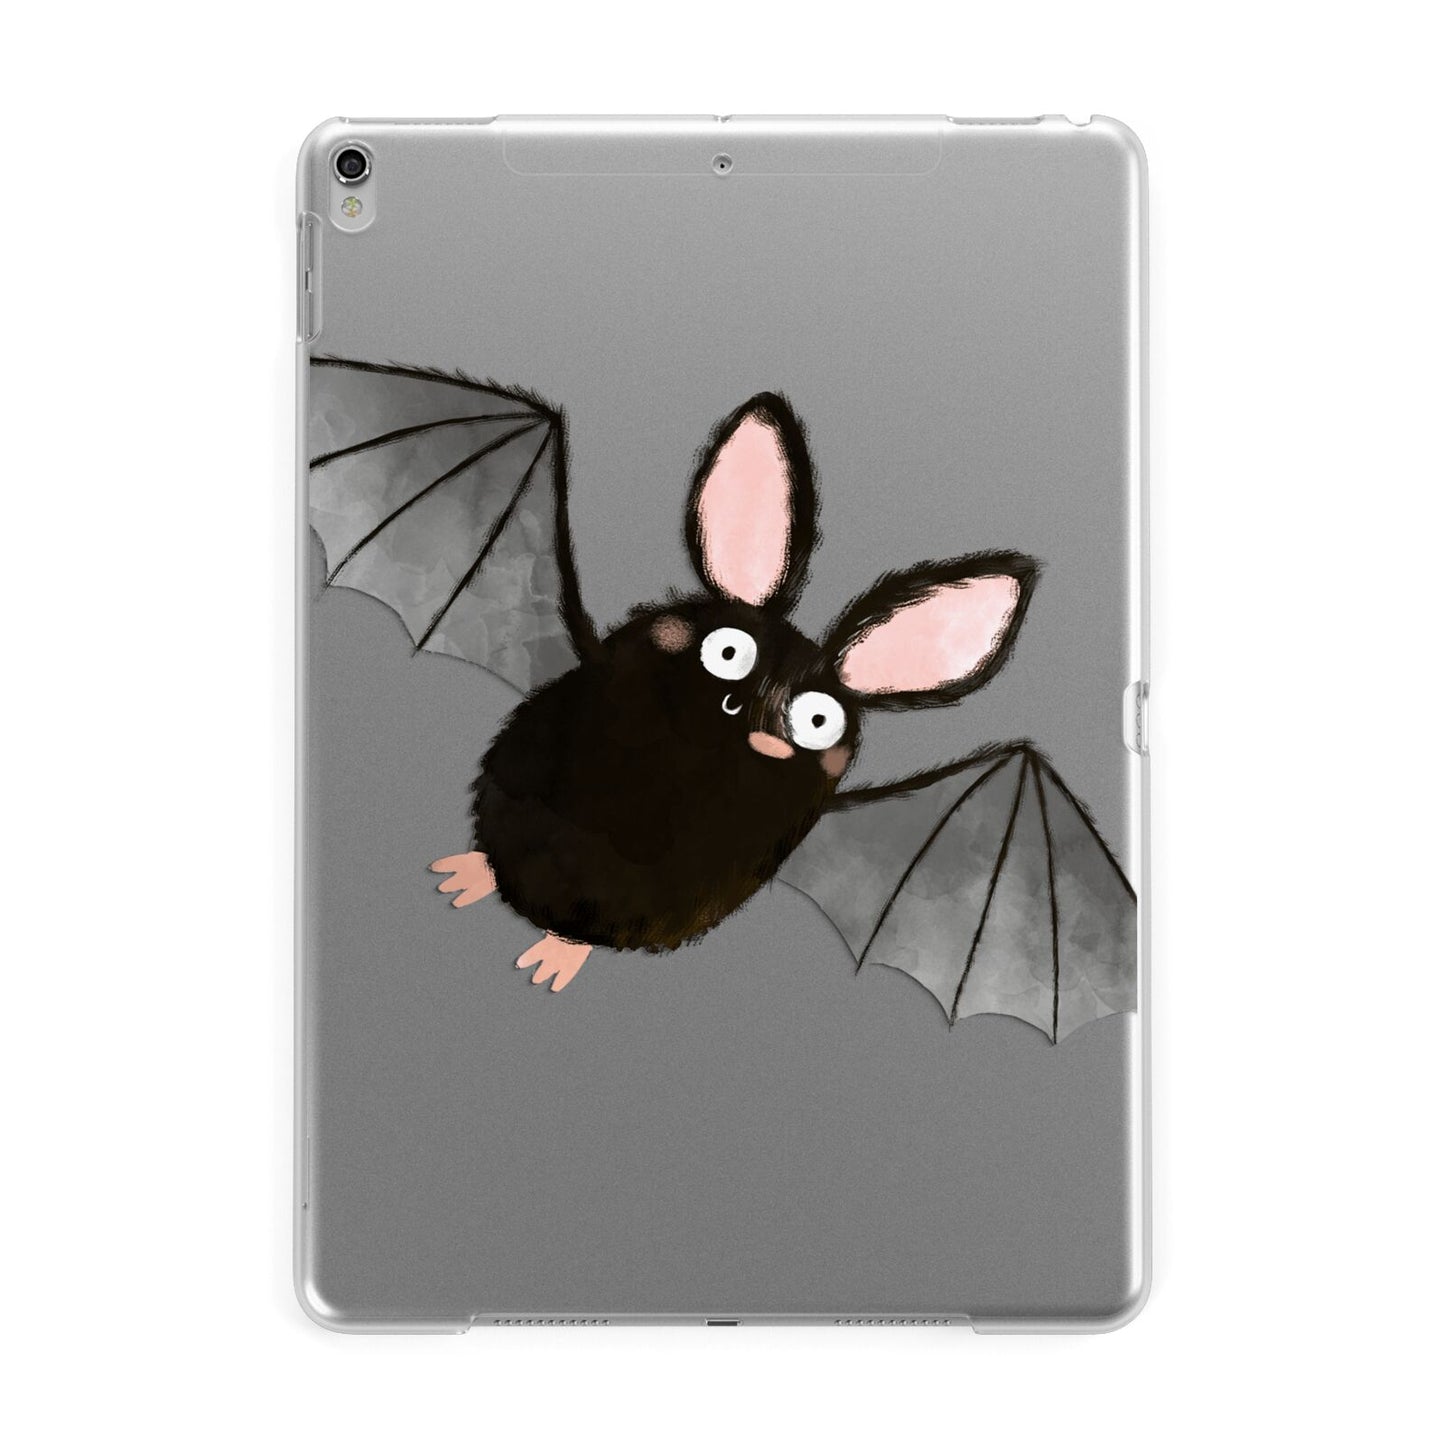 Bat Illustration Apple iPad Silver Case